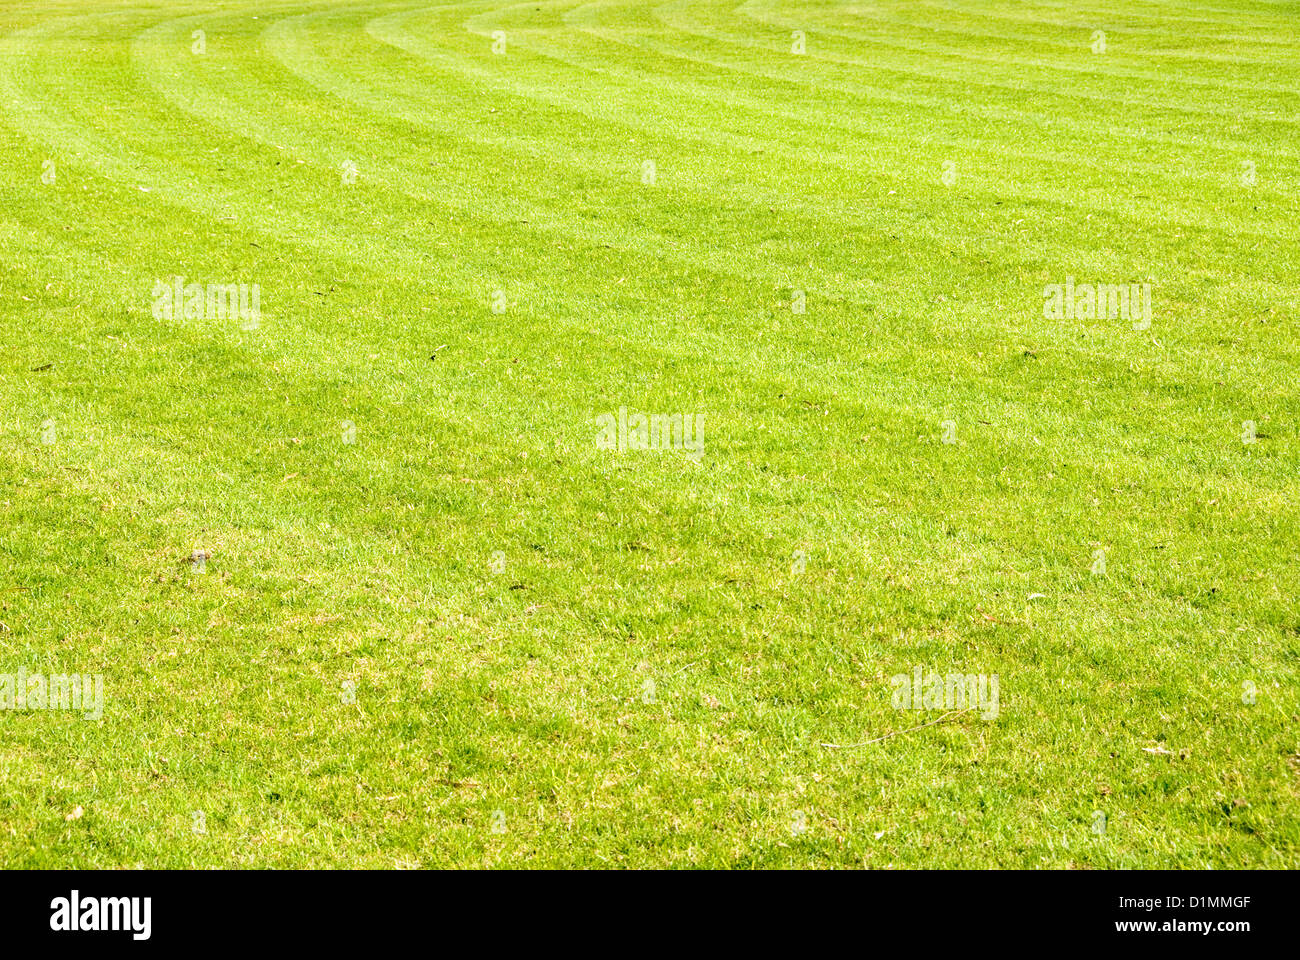 A grass sports field Stock Photo